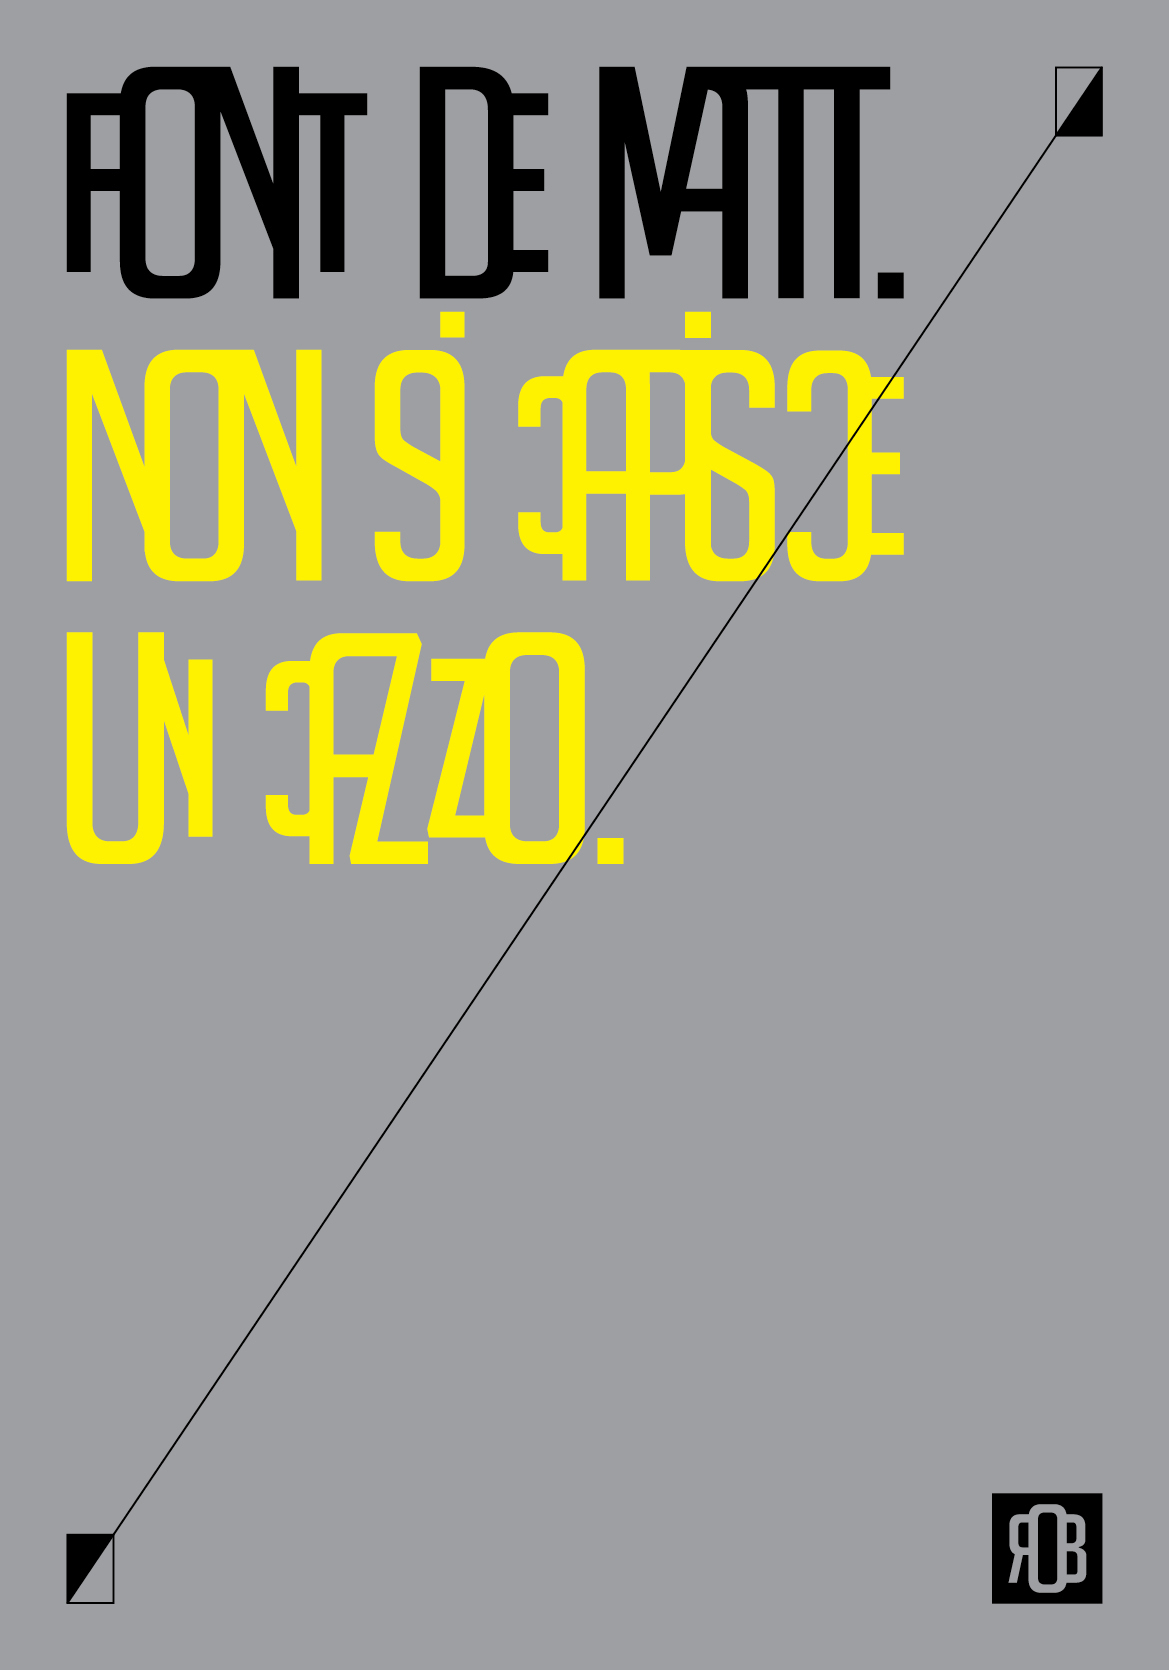 font typo crazy design CYMK black poster postcard Logotype logo logogram logographic quadricromia alphabet